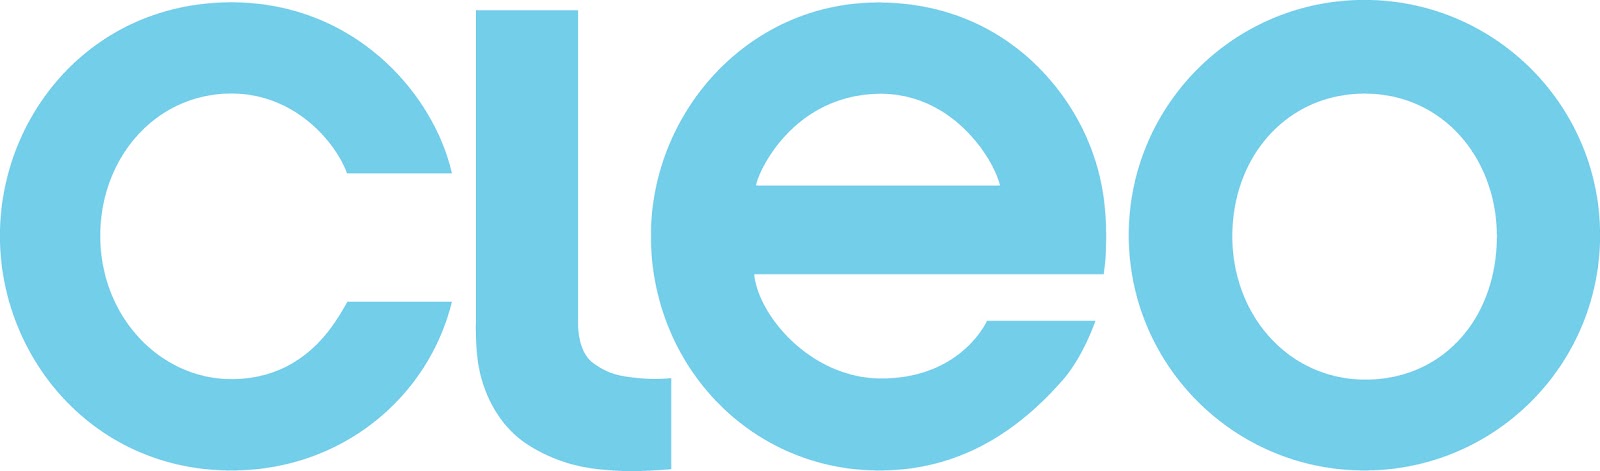 cleo logo.jpg